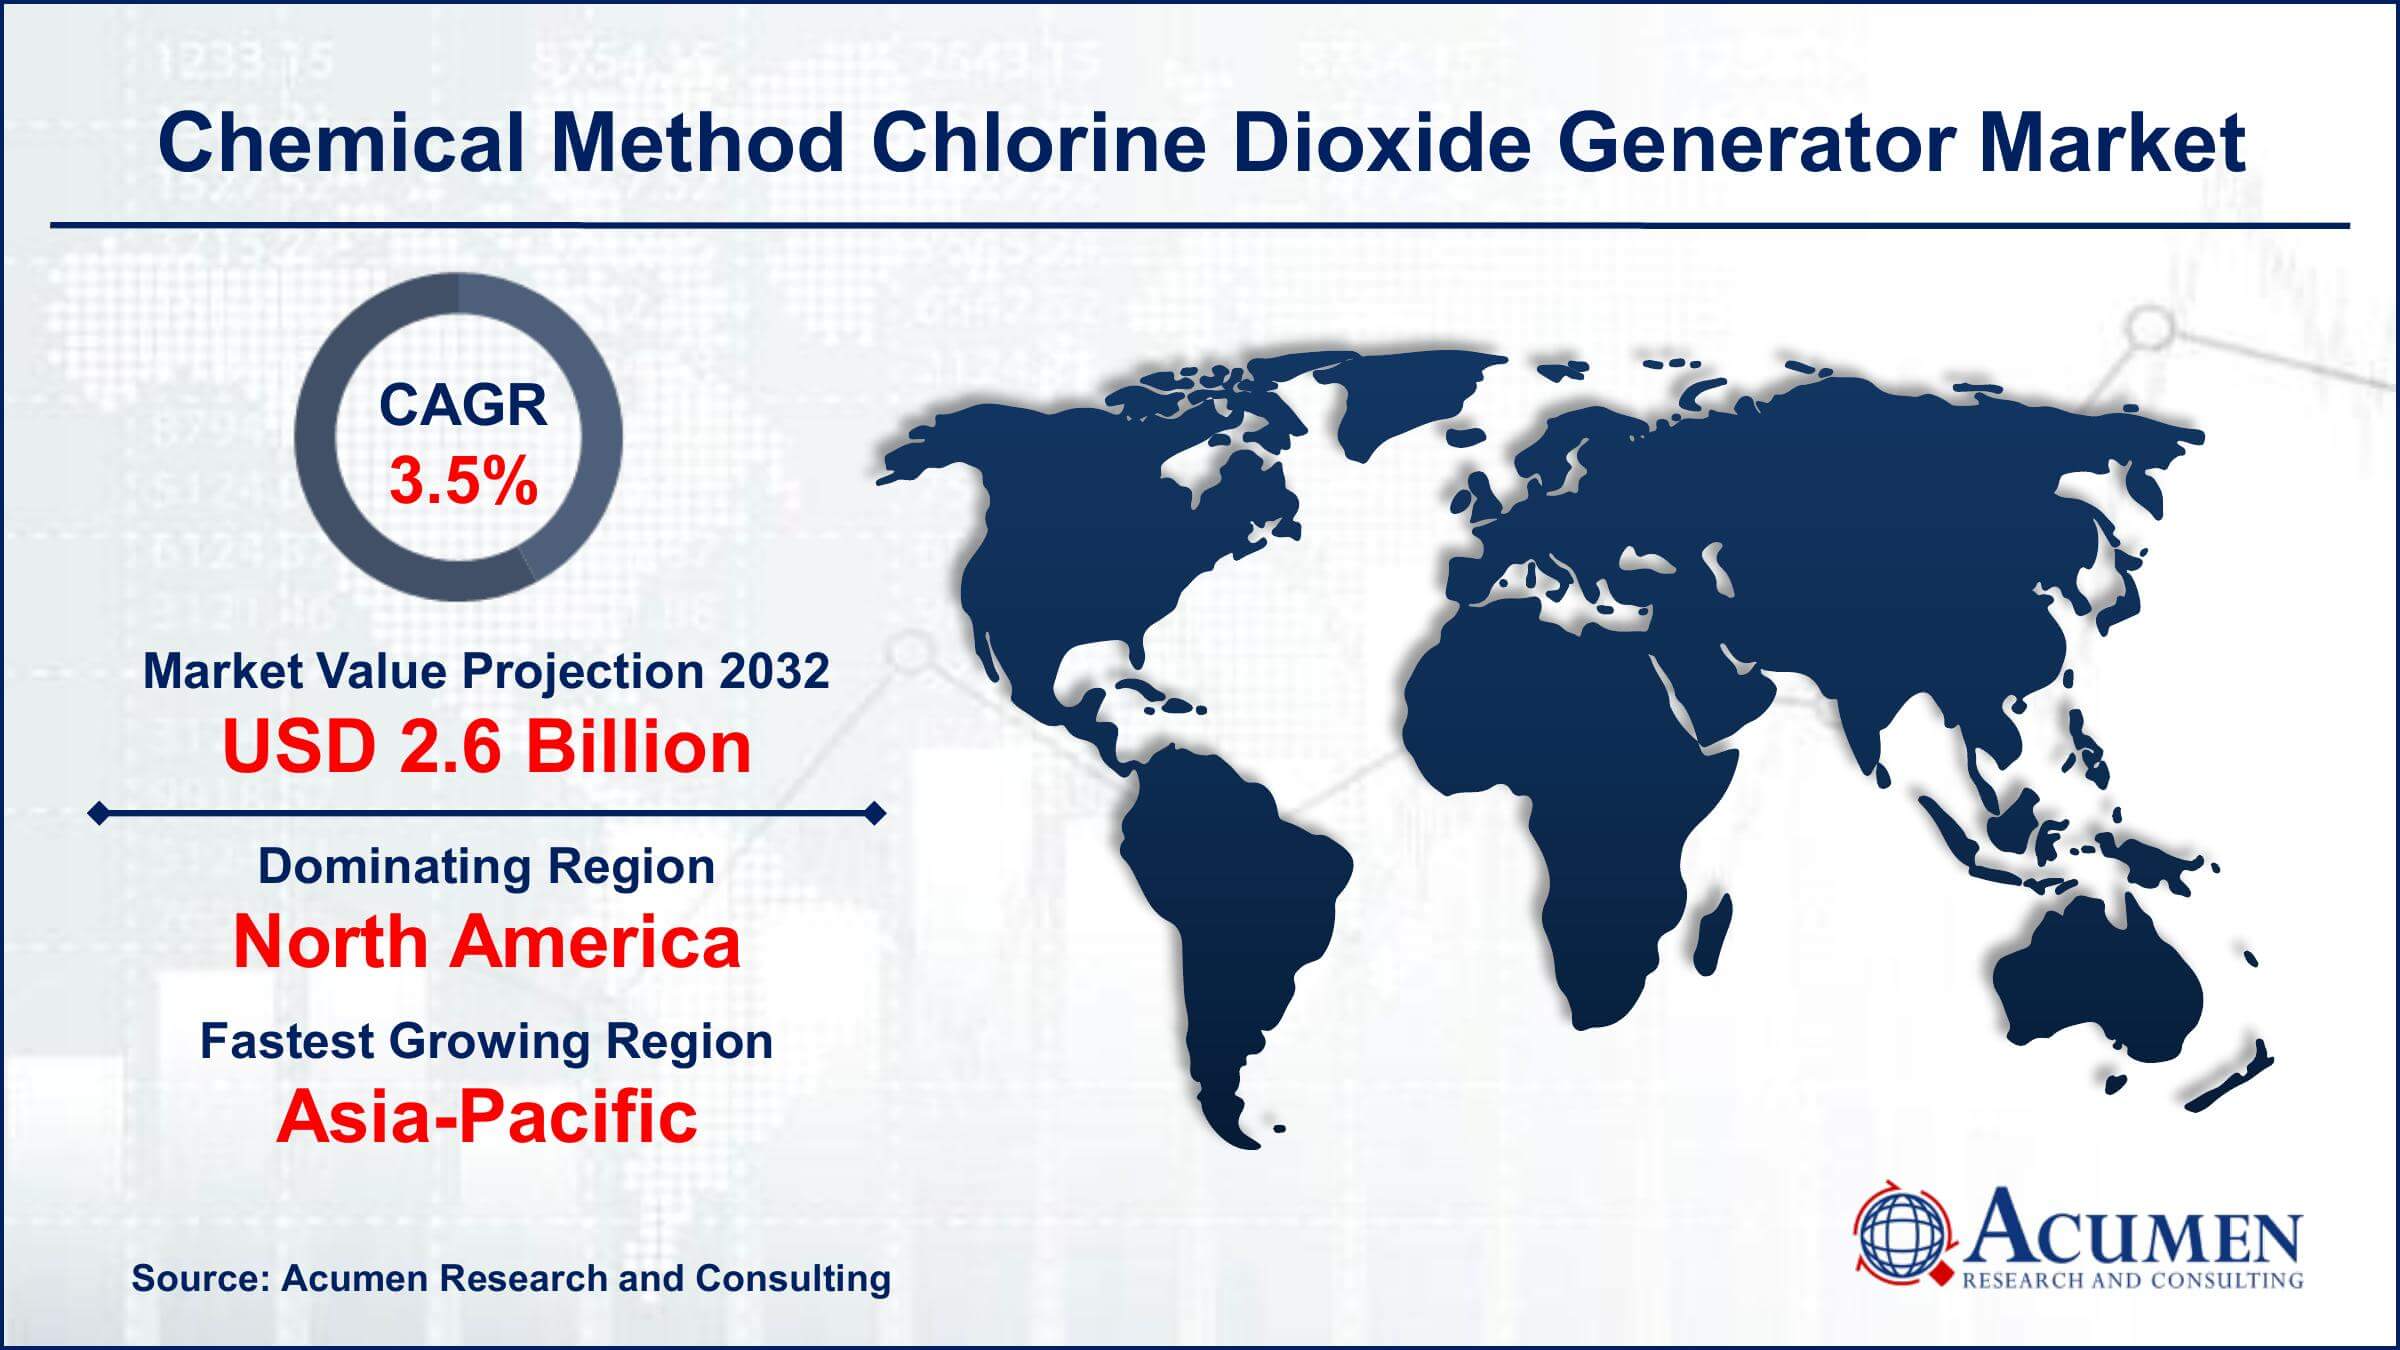 Global Chemical Method Chlorine Dioxide Generator Market Trends